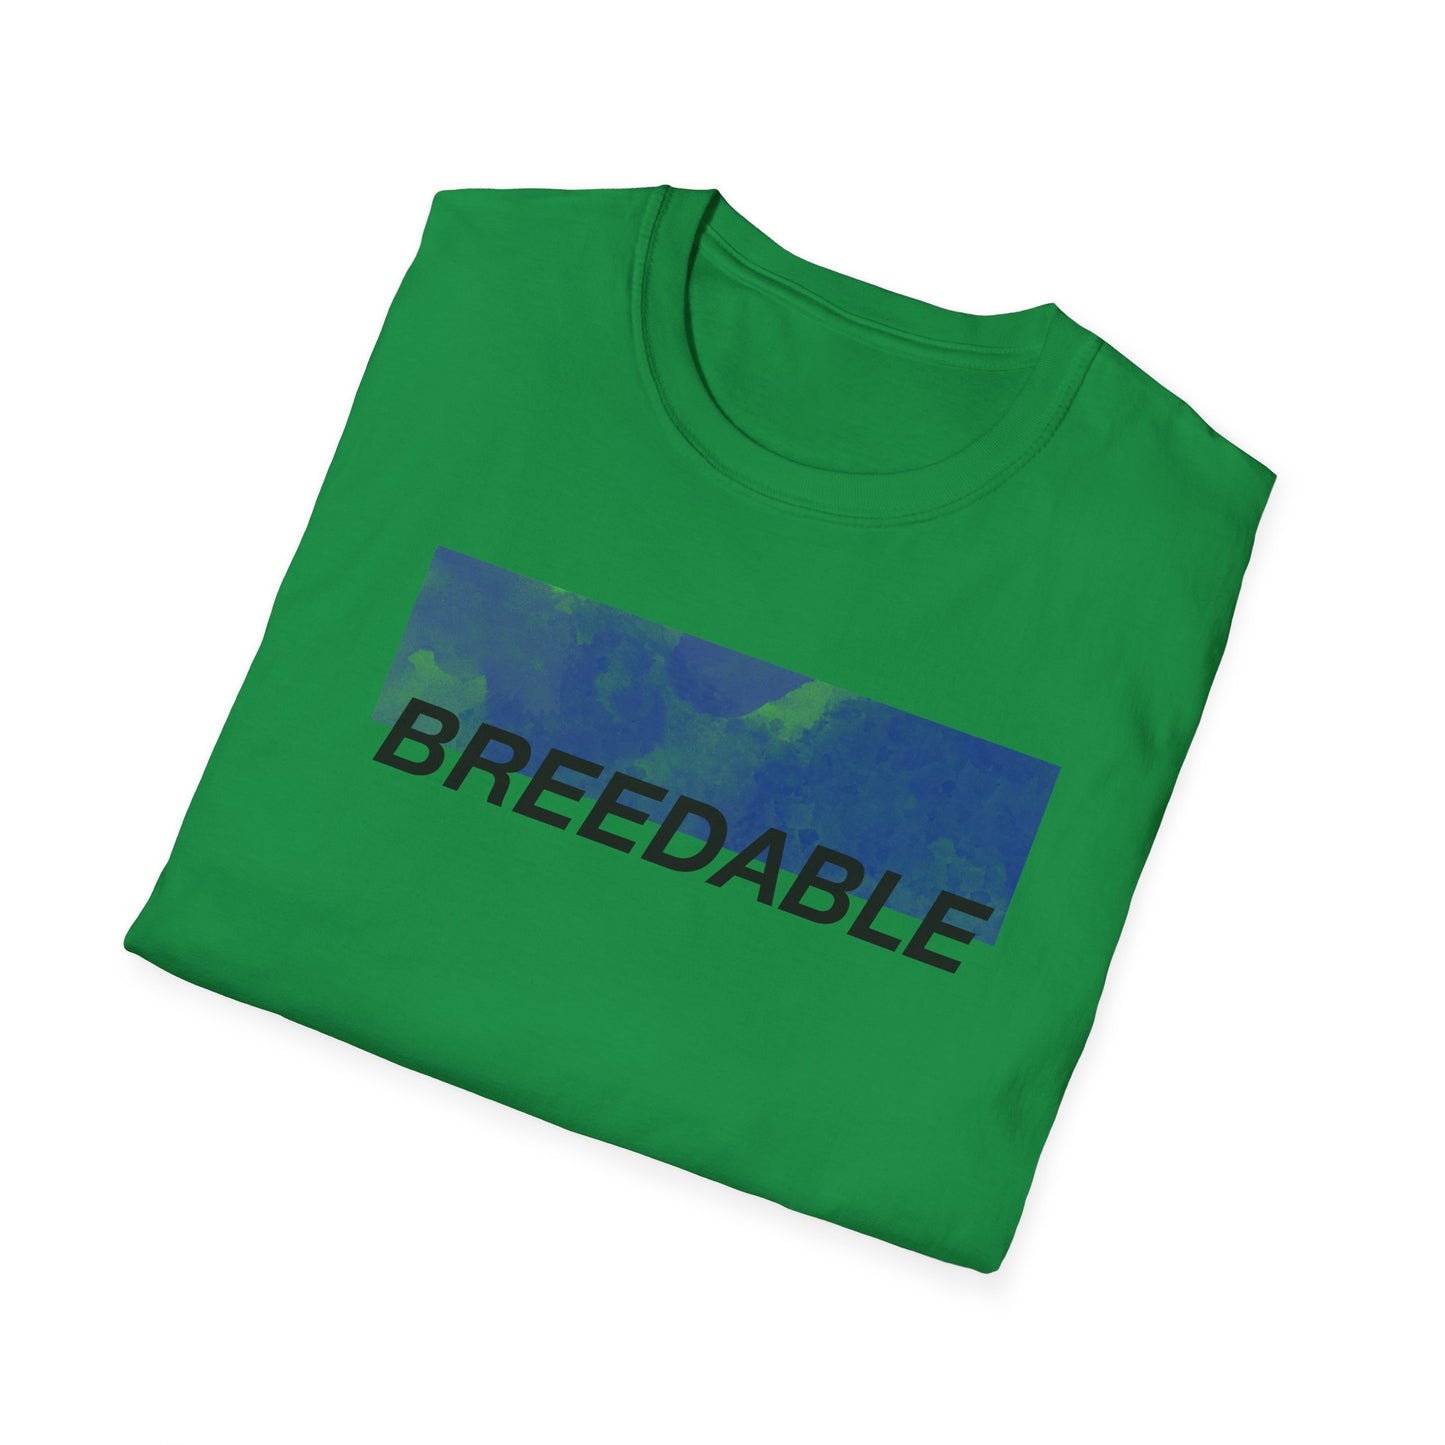 Breedable Shirt